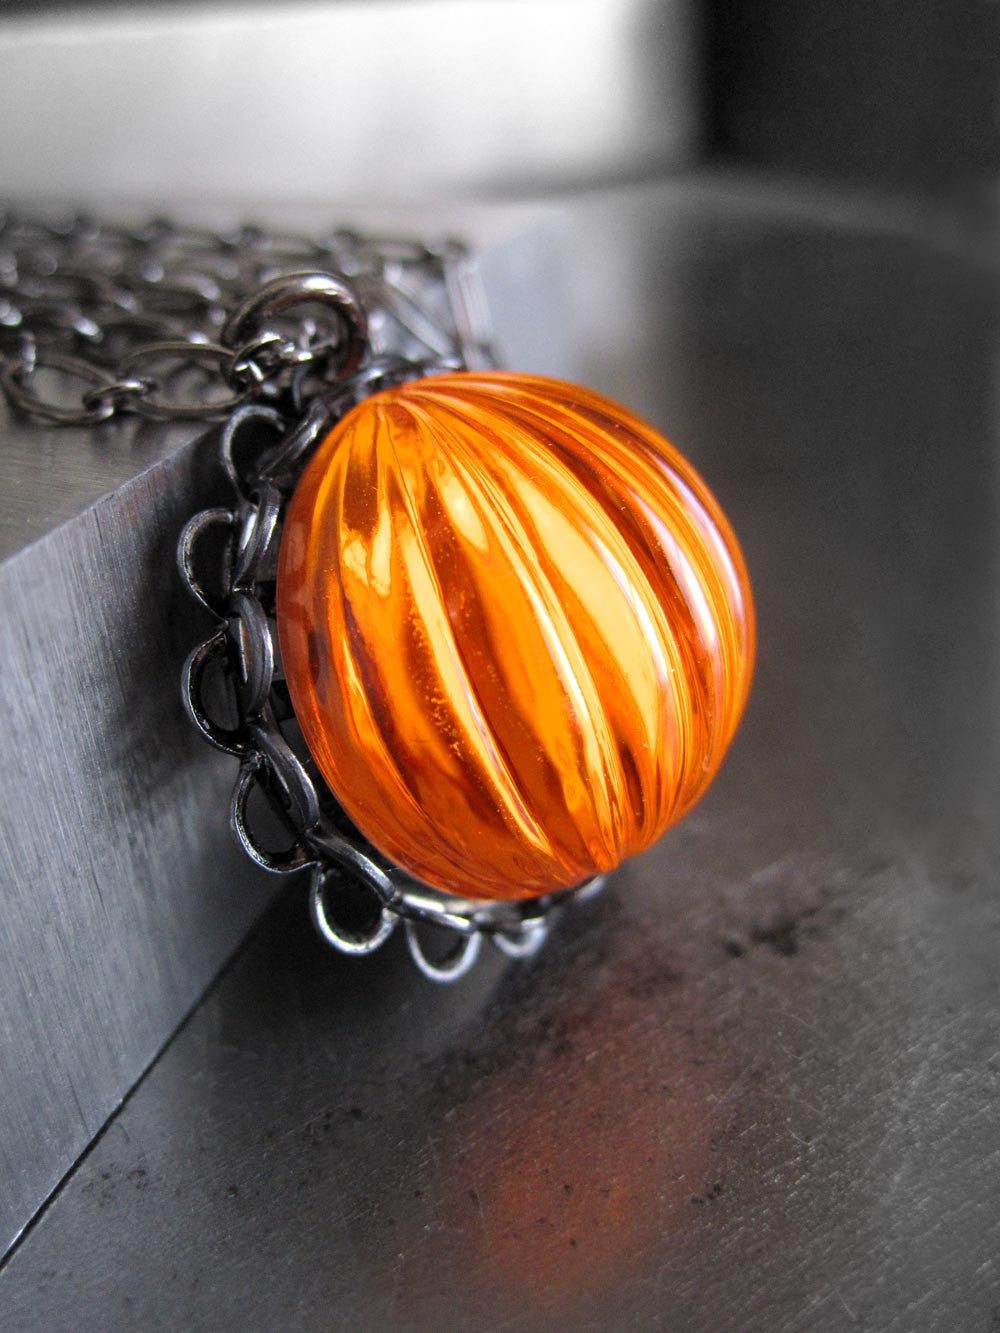 Brilliant Orange Halloween Pumpkin Necklace